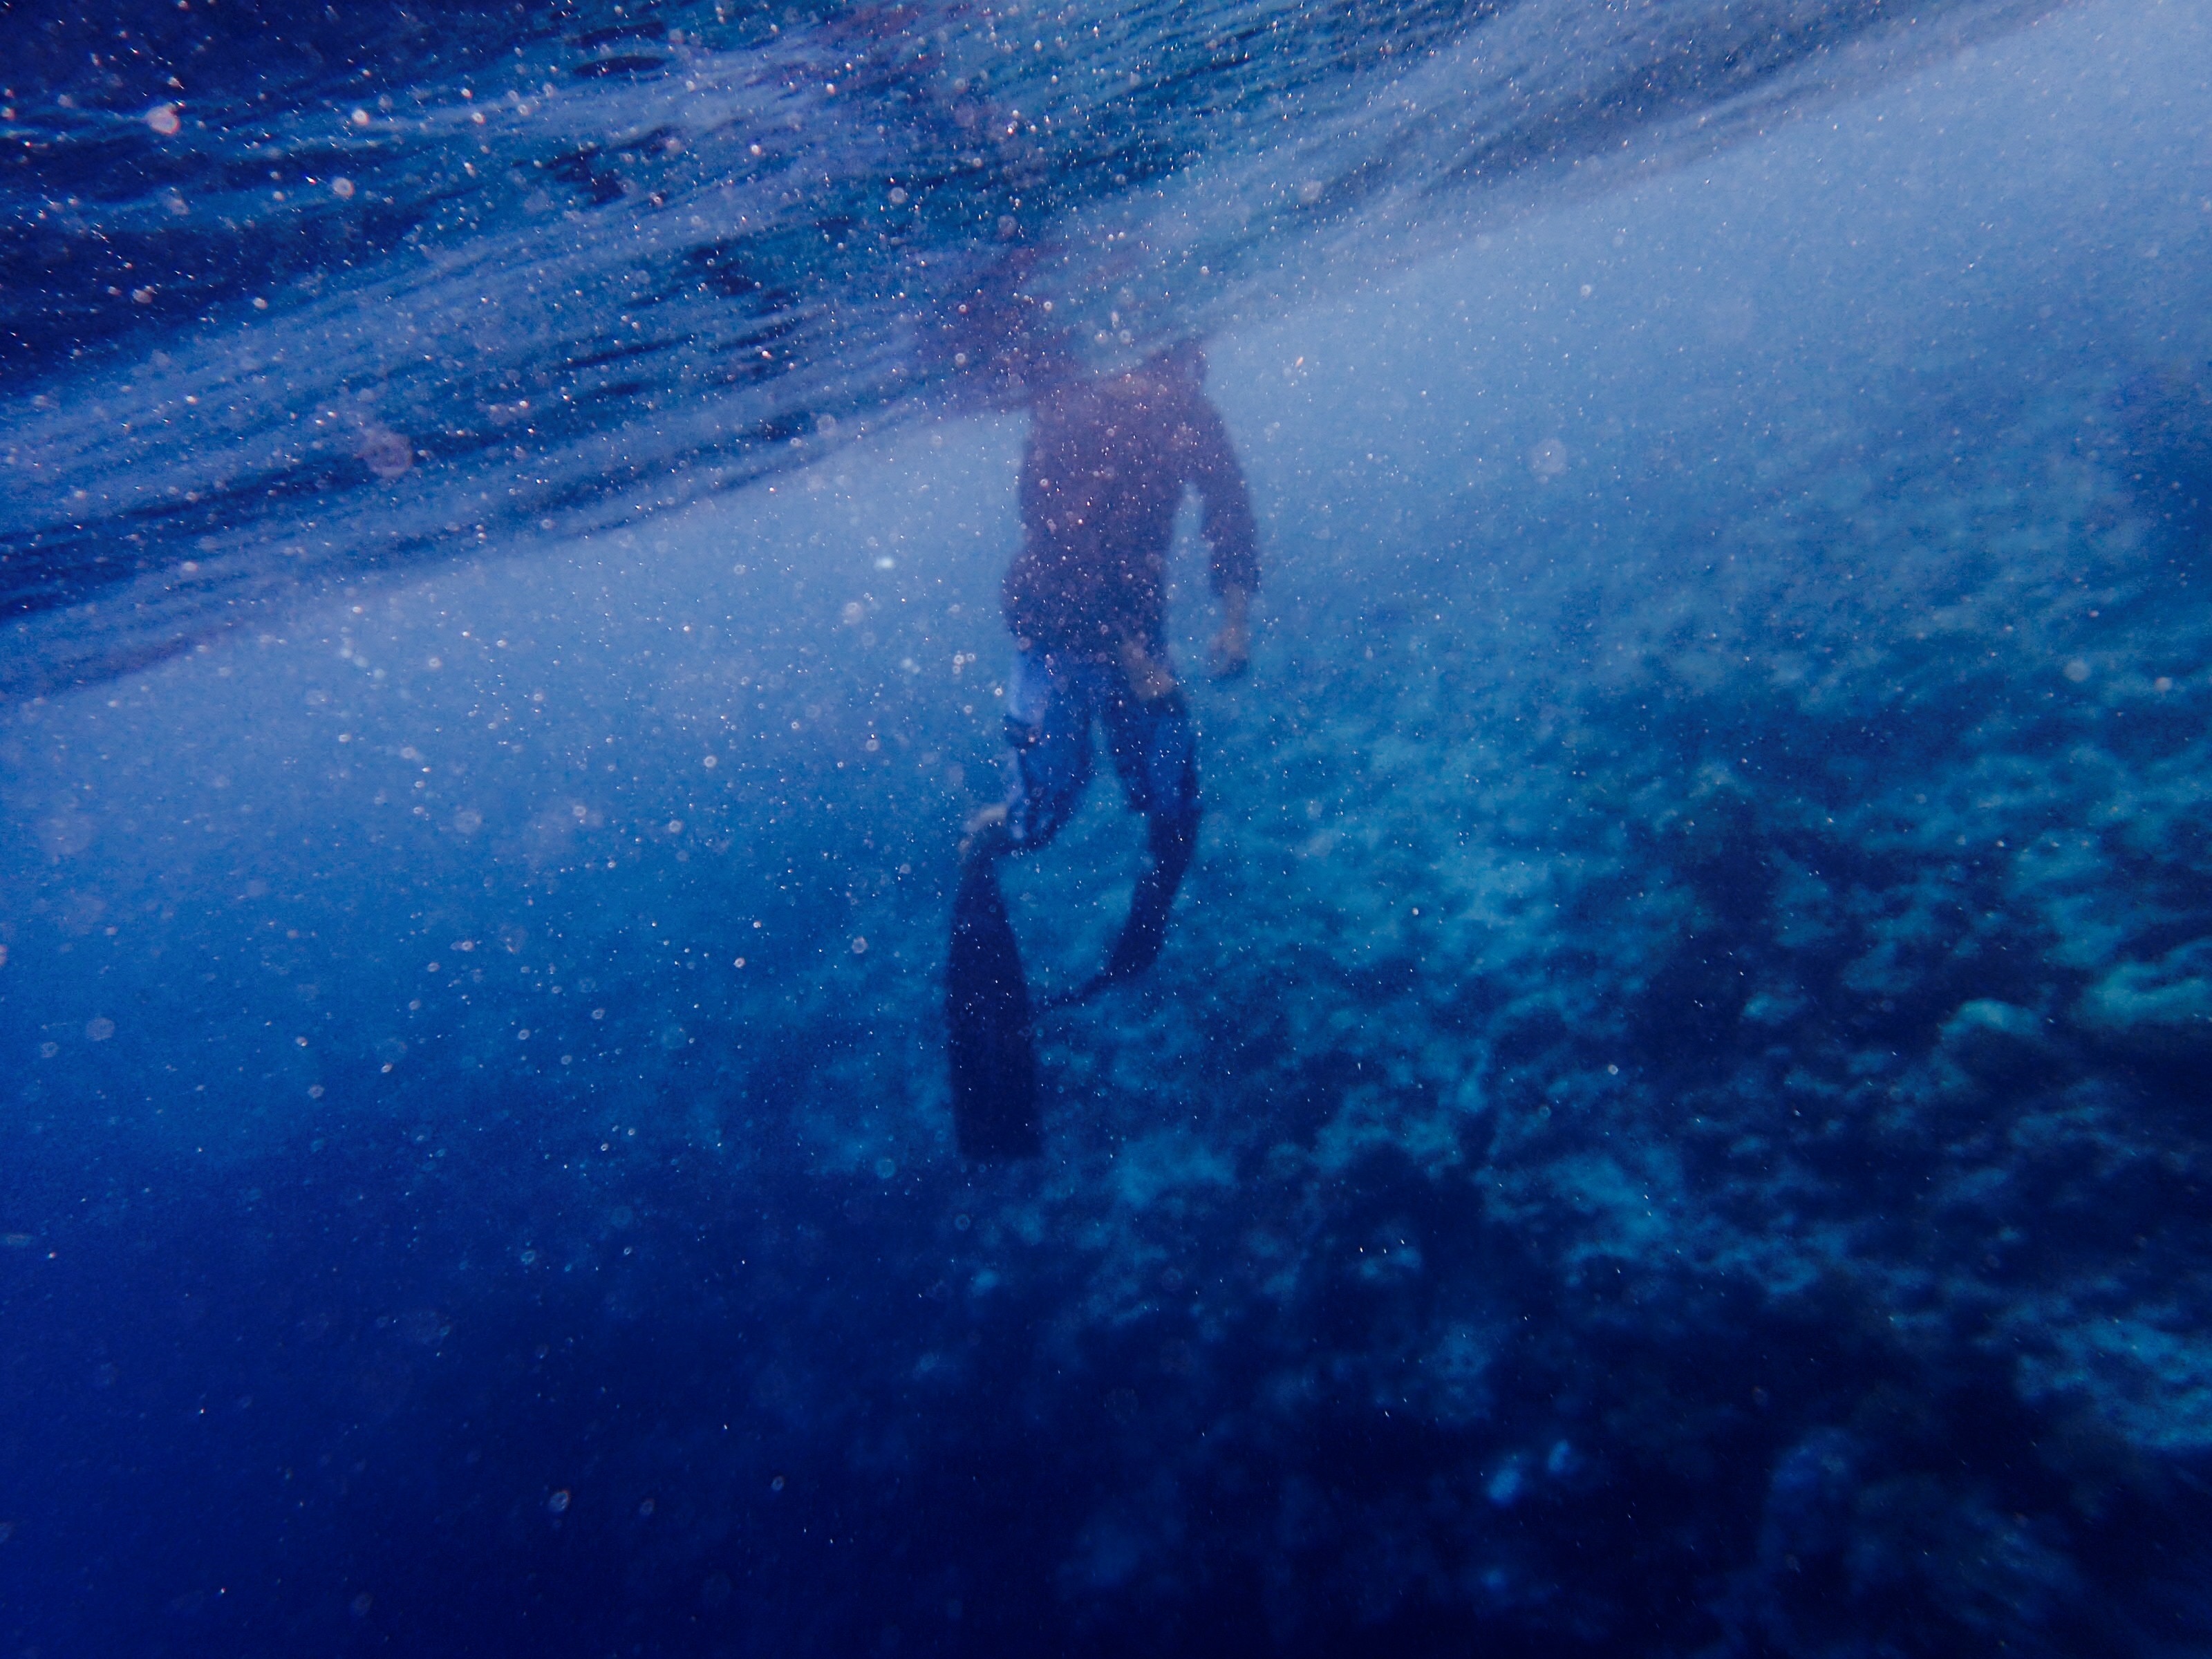 person in wet suit under water